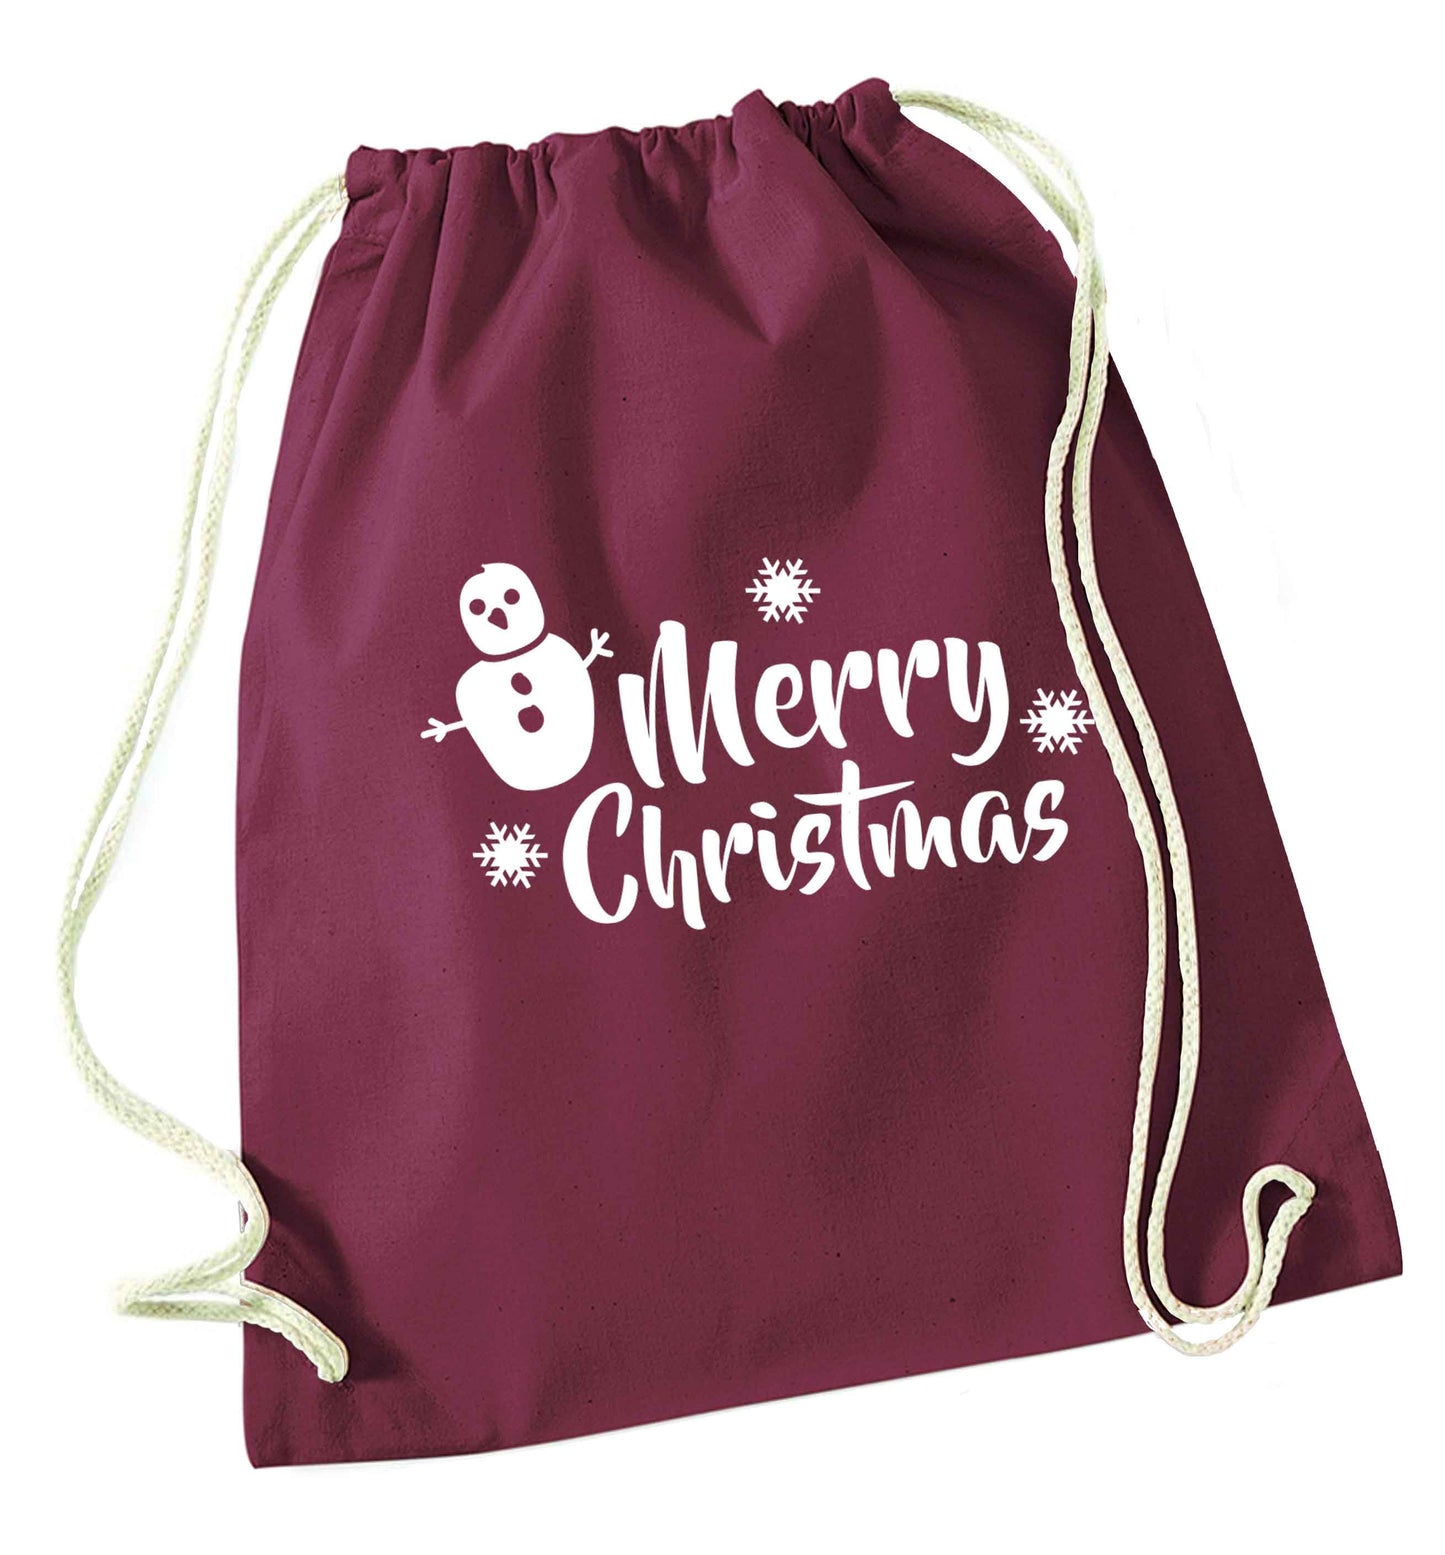 Merry Christmas - snowman maroon drawstring bag